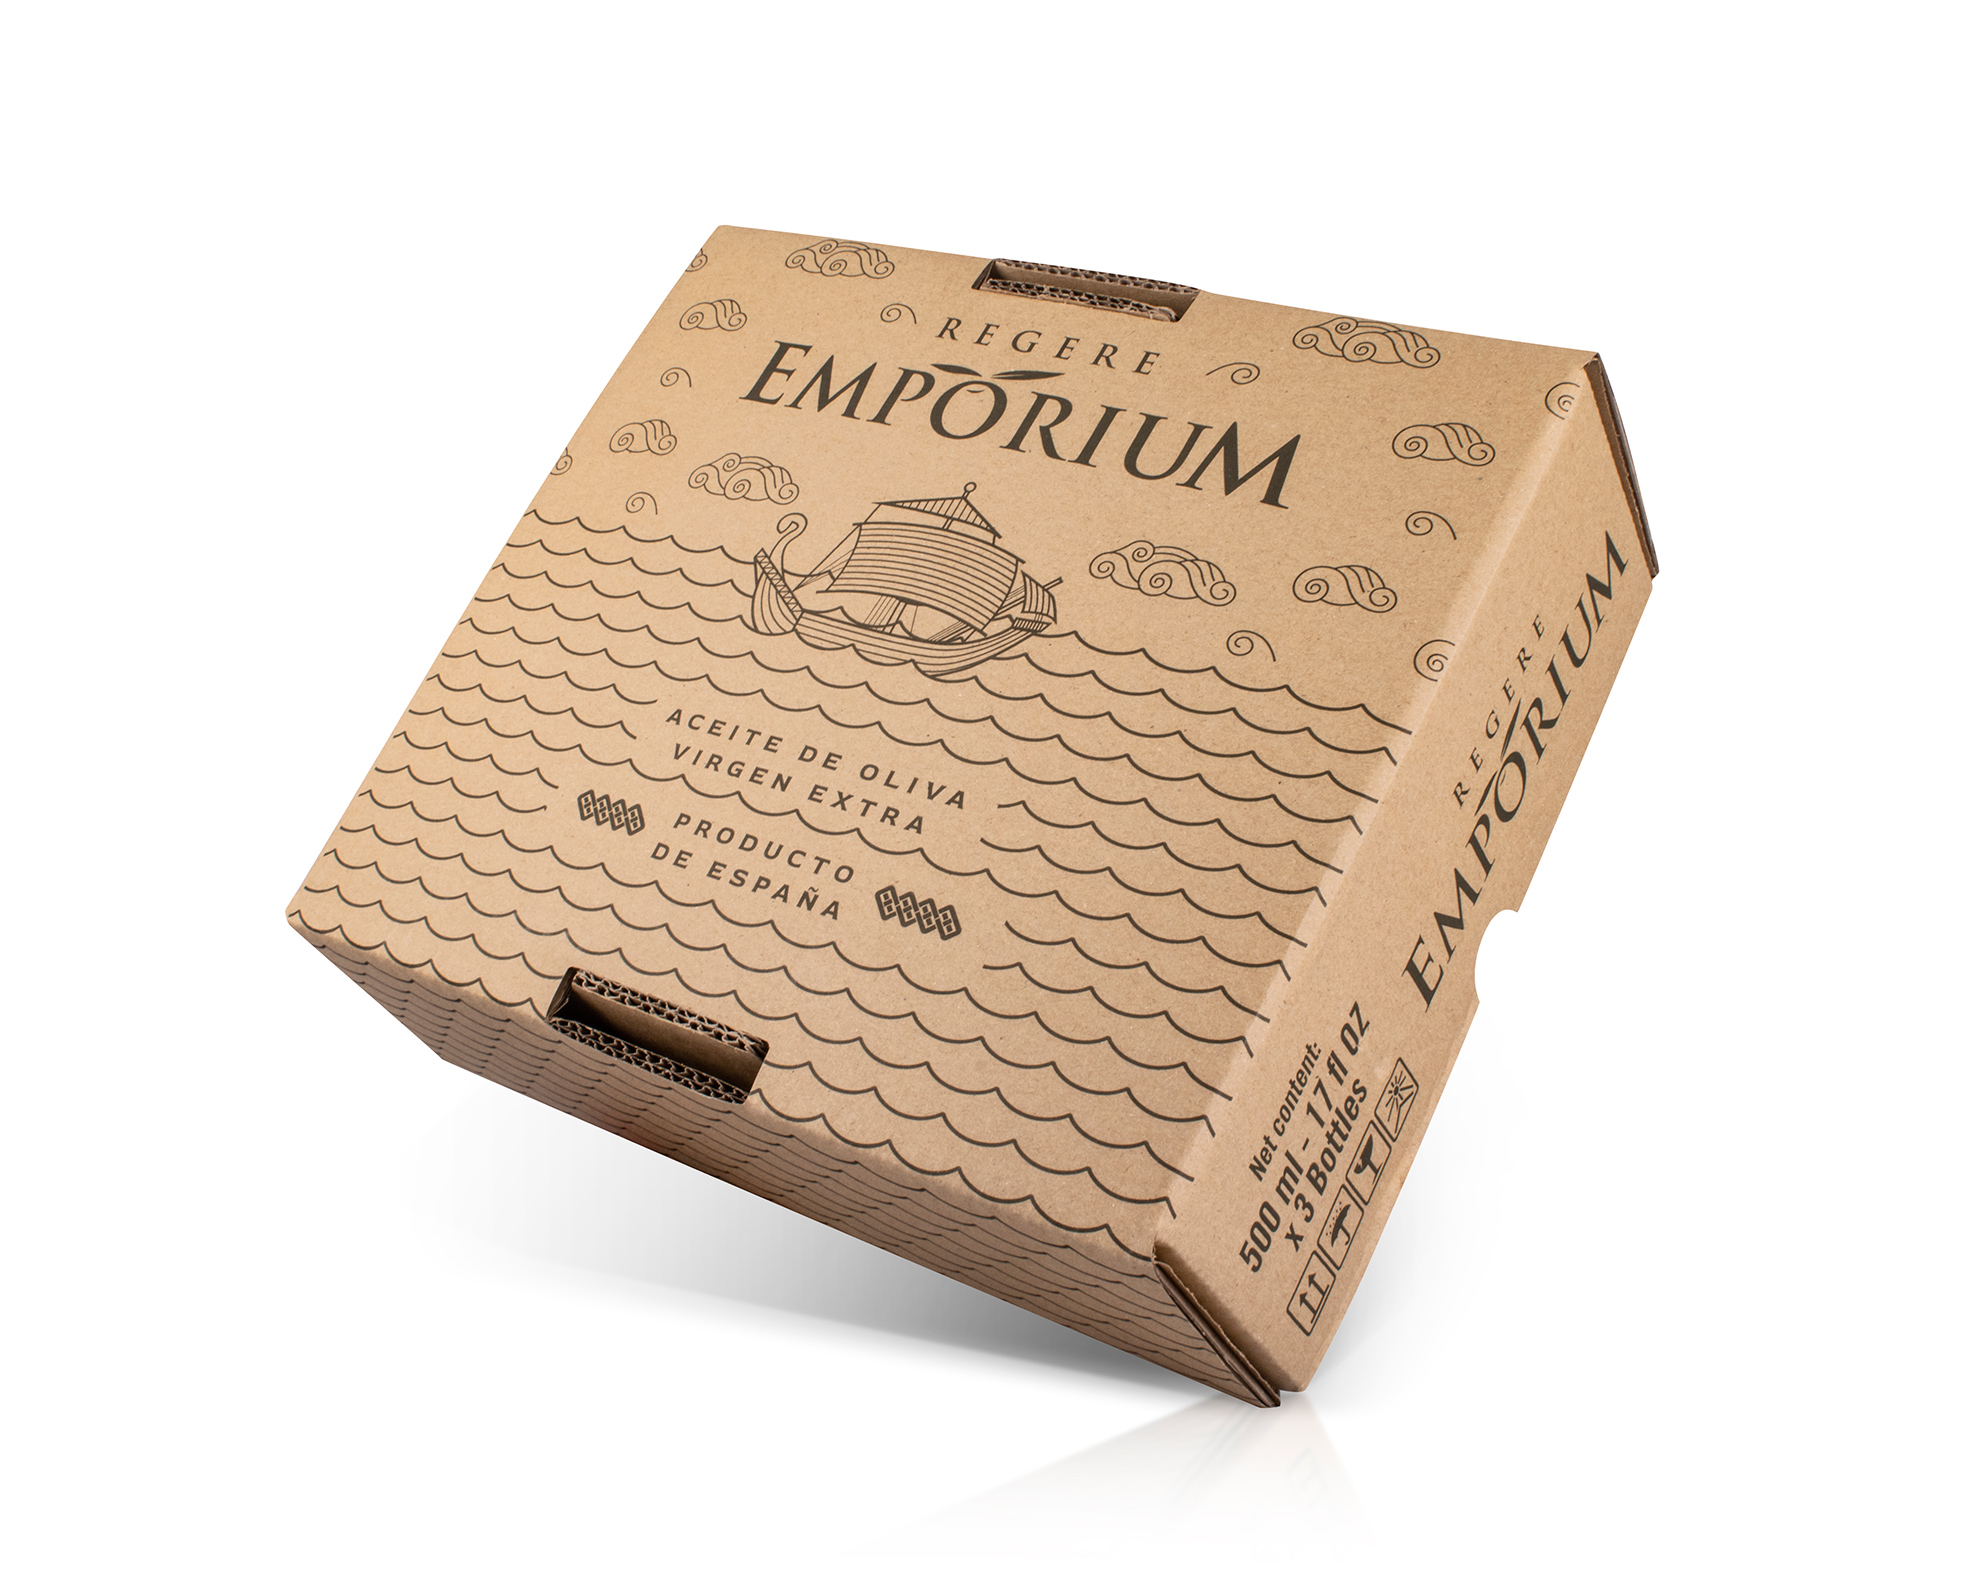 Emporium brand y packaging aceite